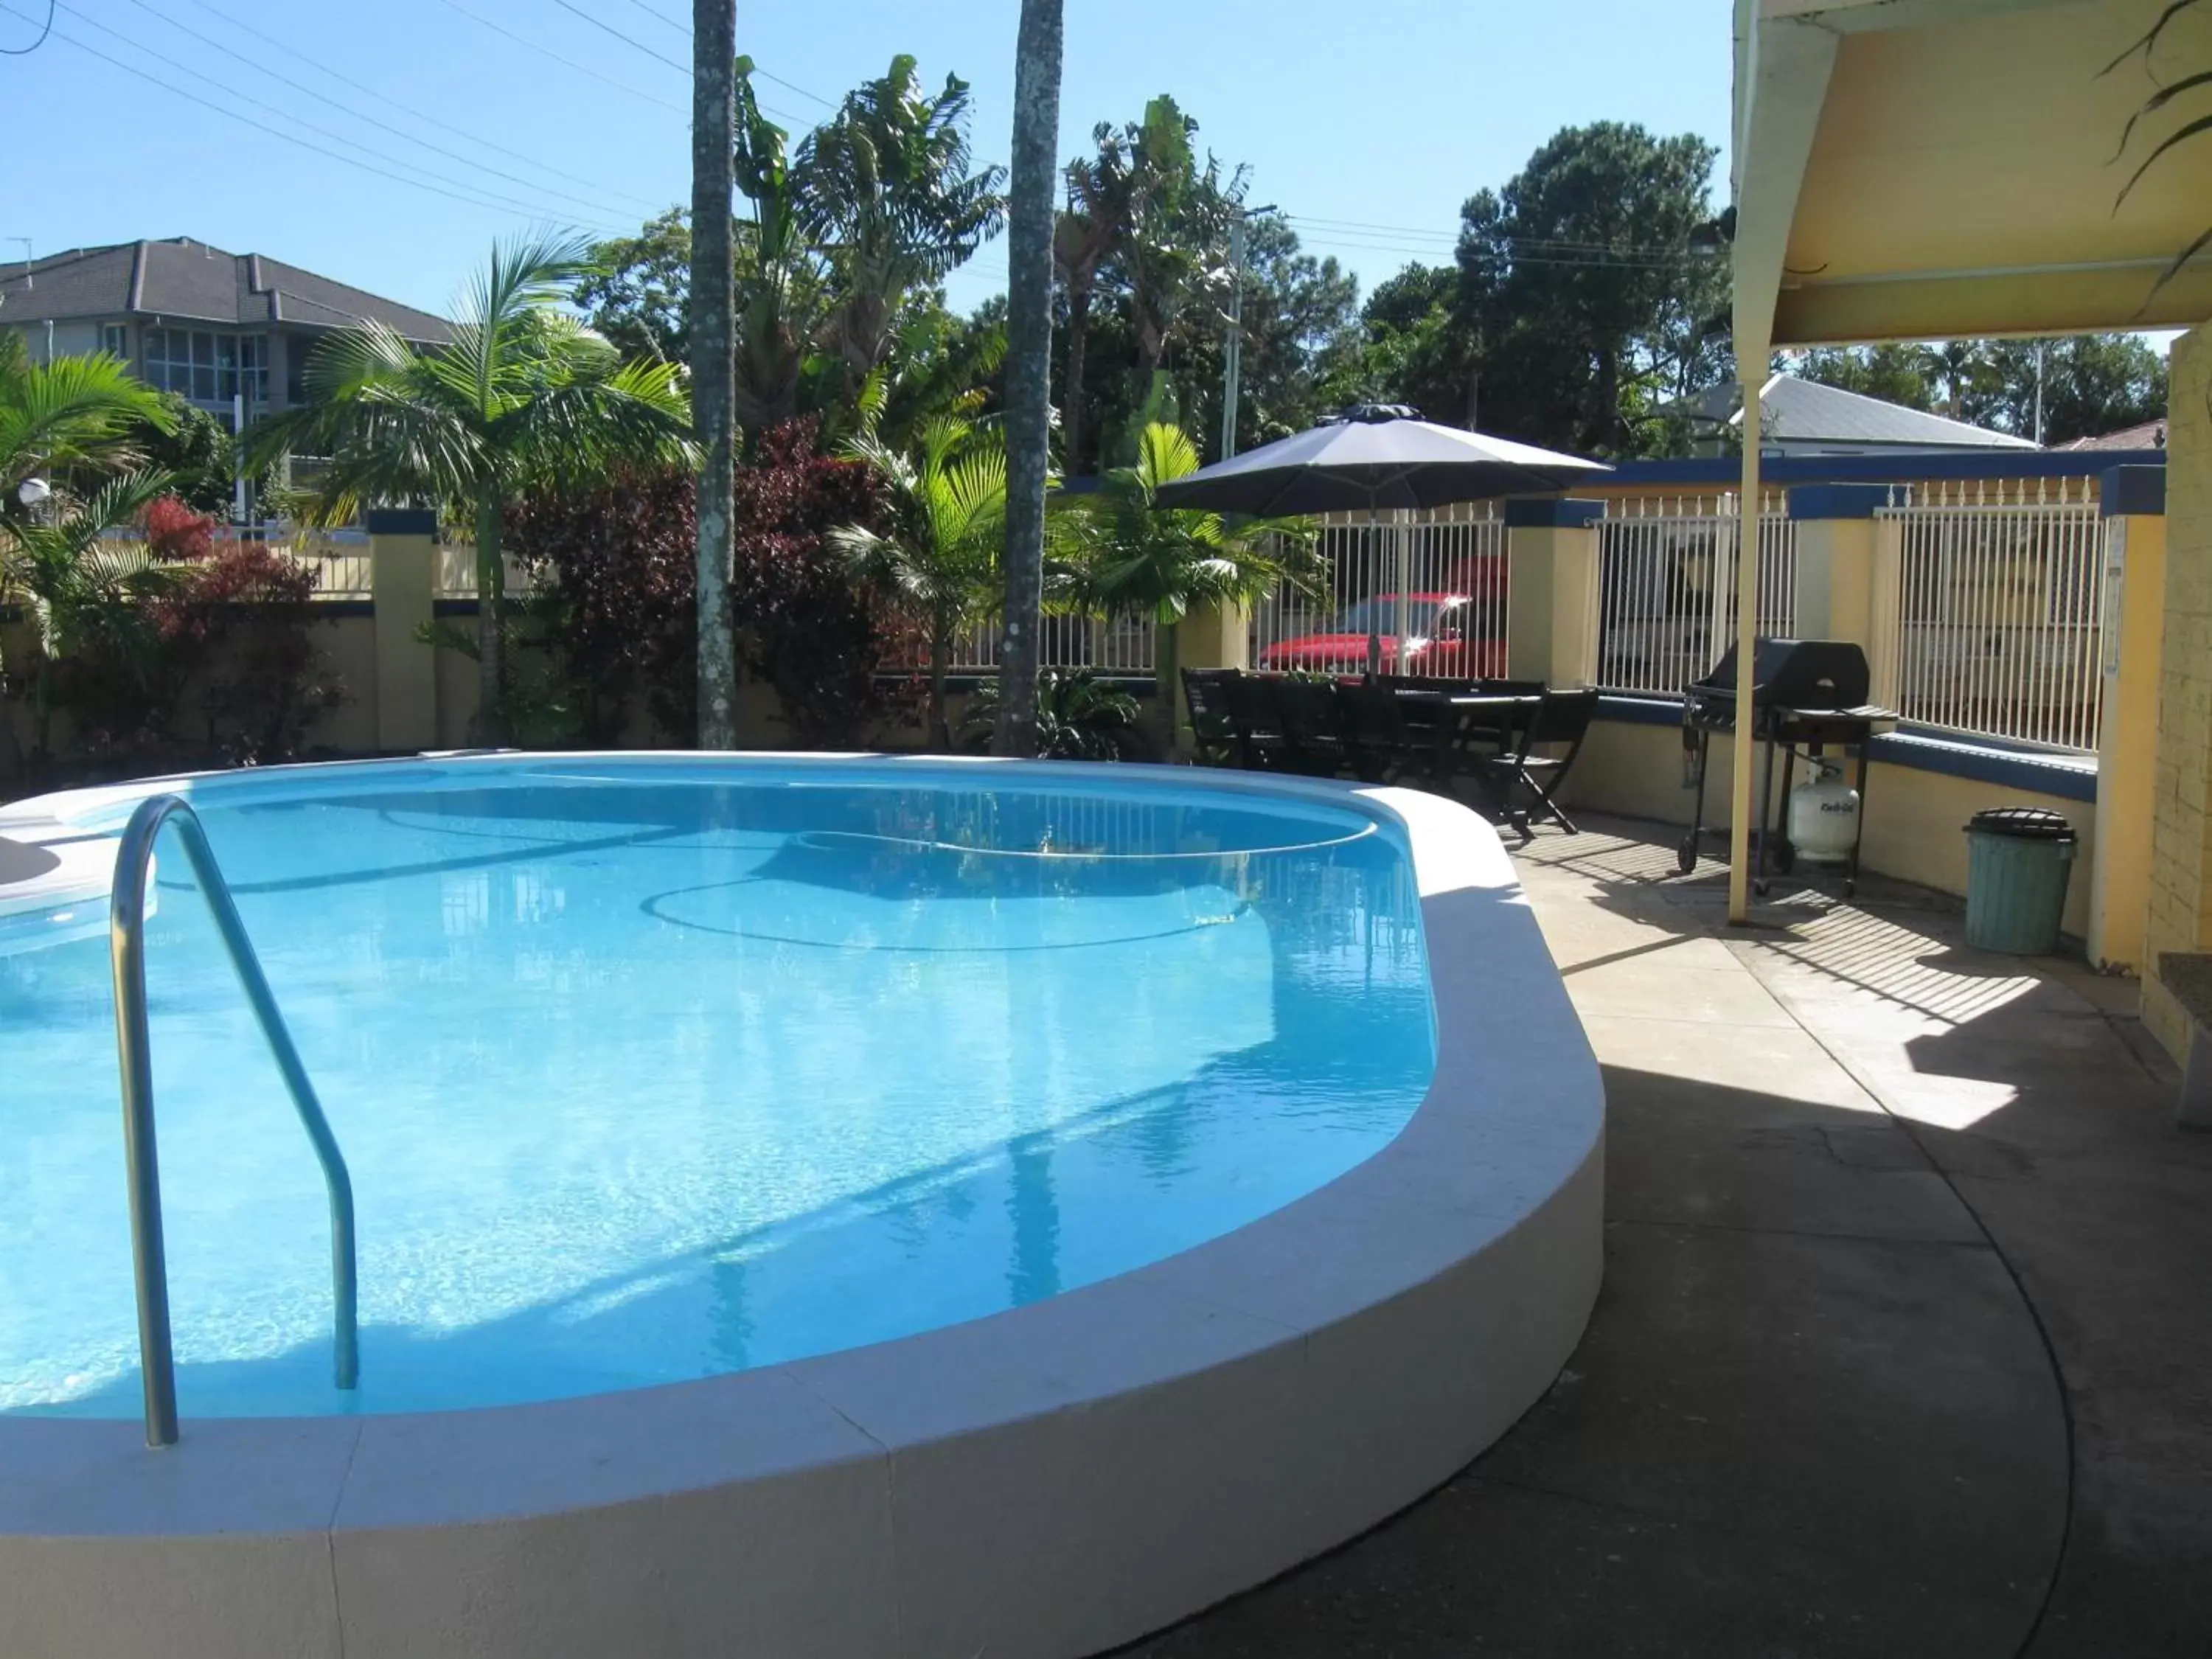 Swimming pool in Sunburst Motel